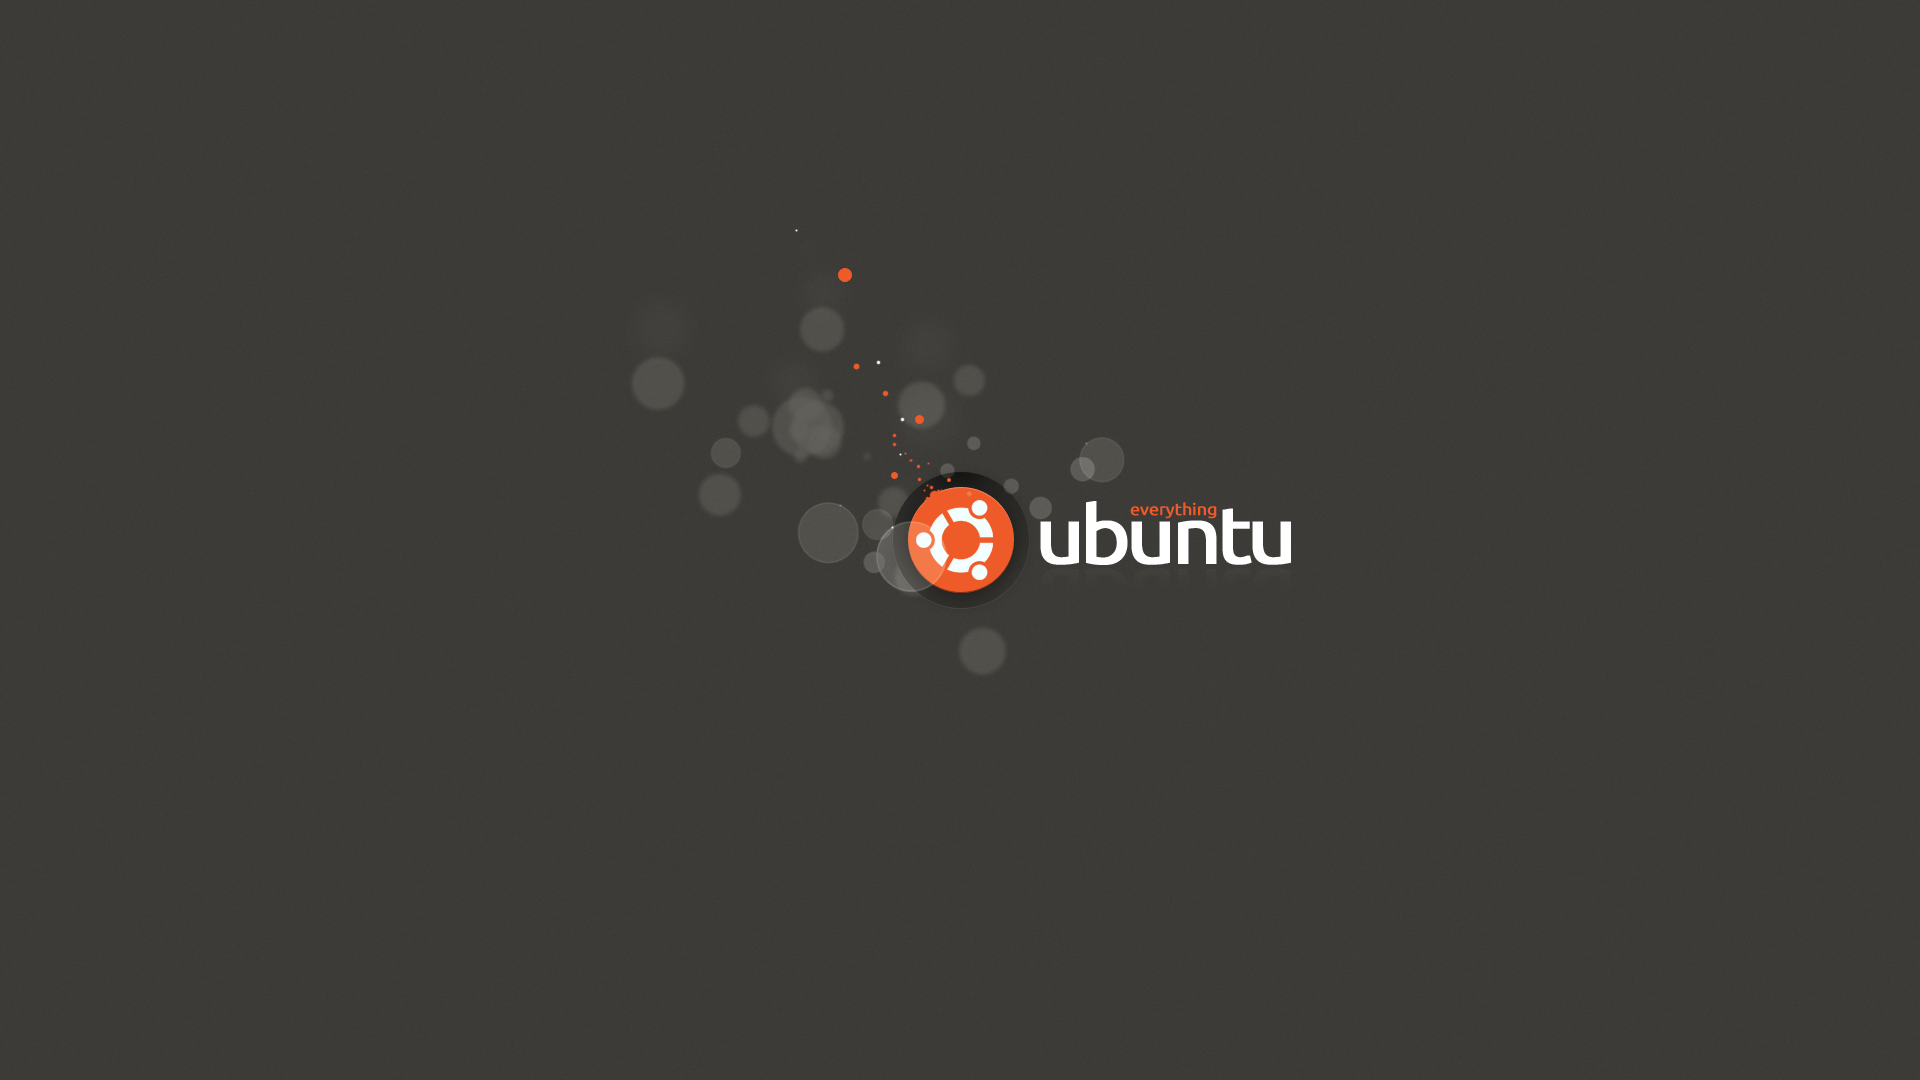 Wallpaper for ubuntu by vinceliuice on DeviantArt